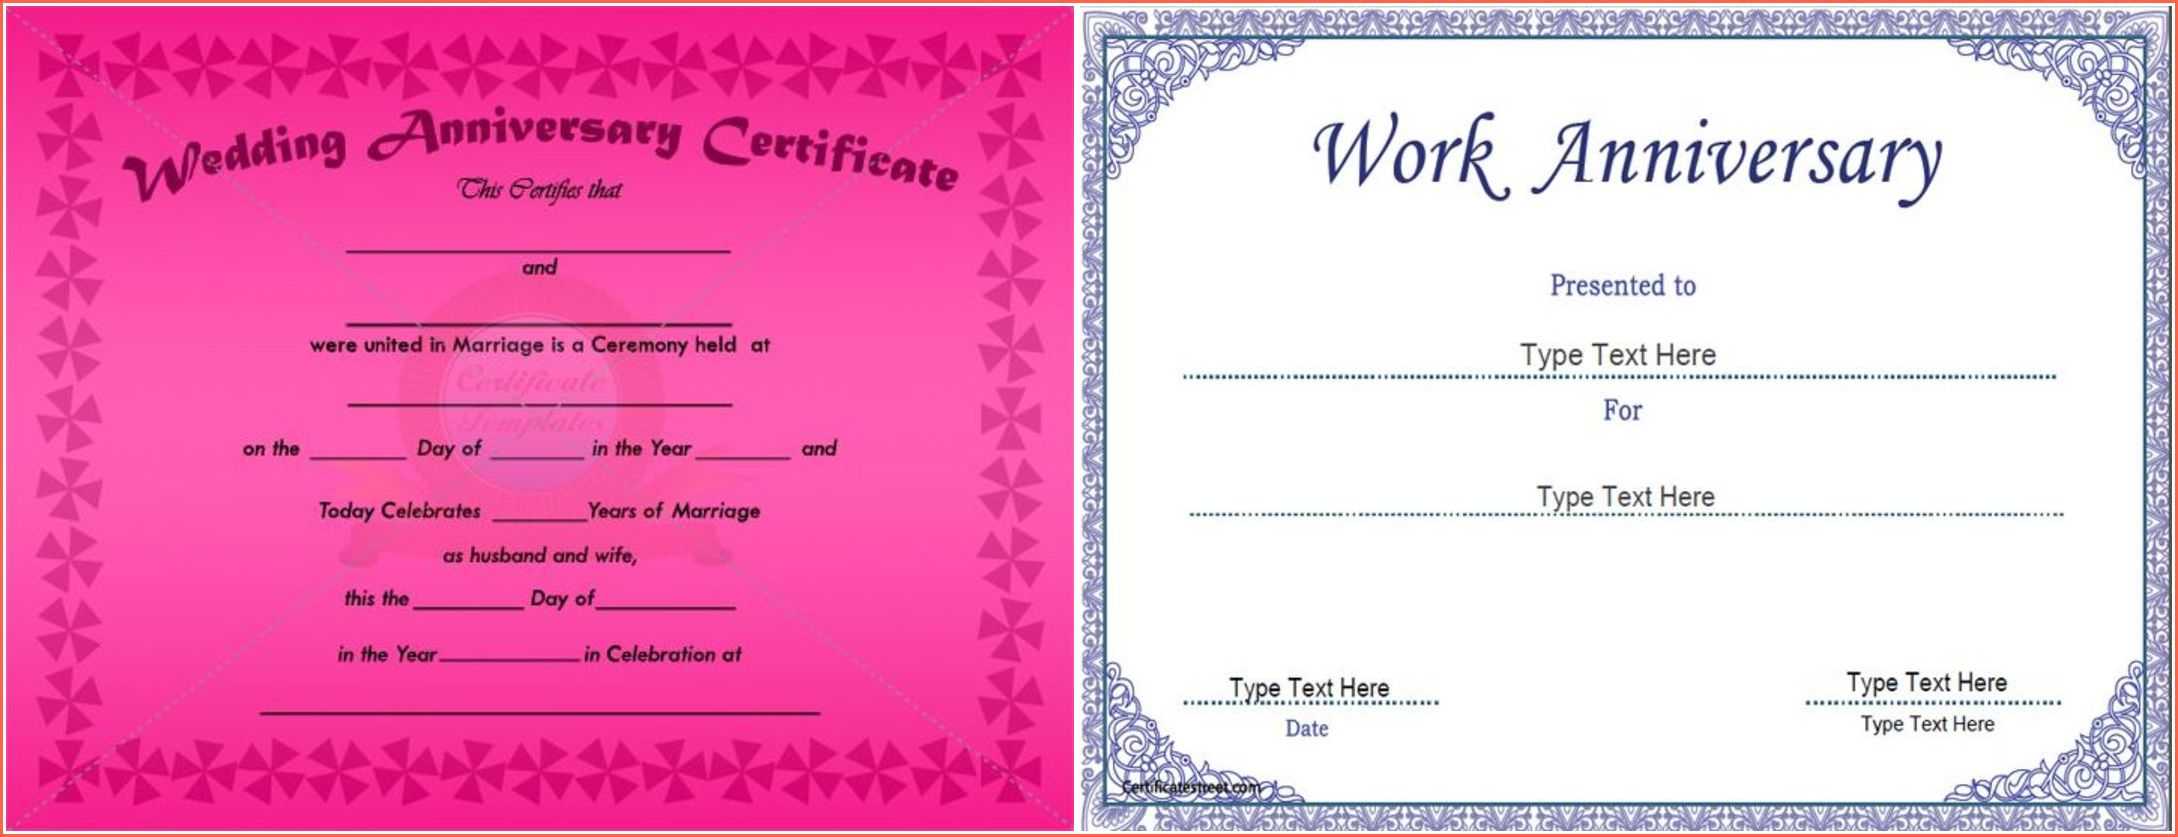 Wedding Anniversary Certificate Template Free With 25Th Gift With Anniversary Certificate Template Free